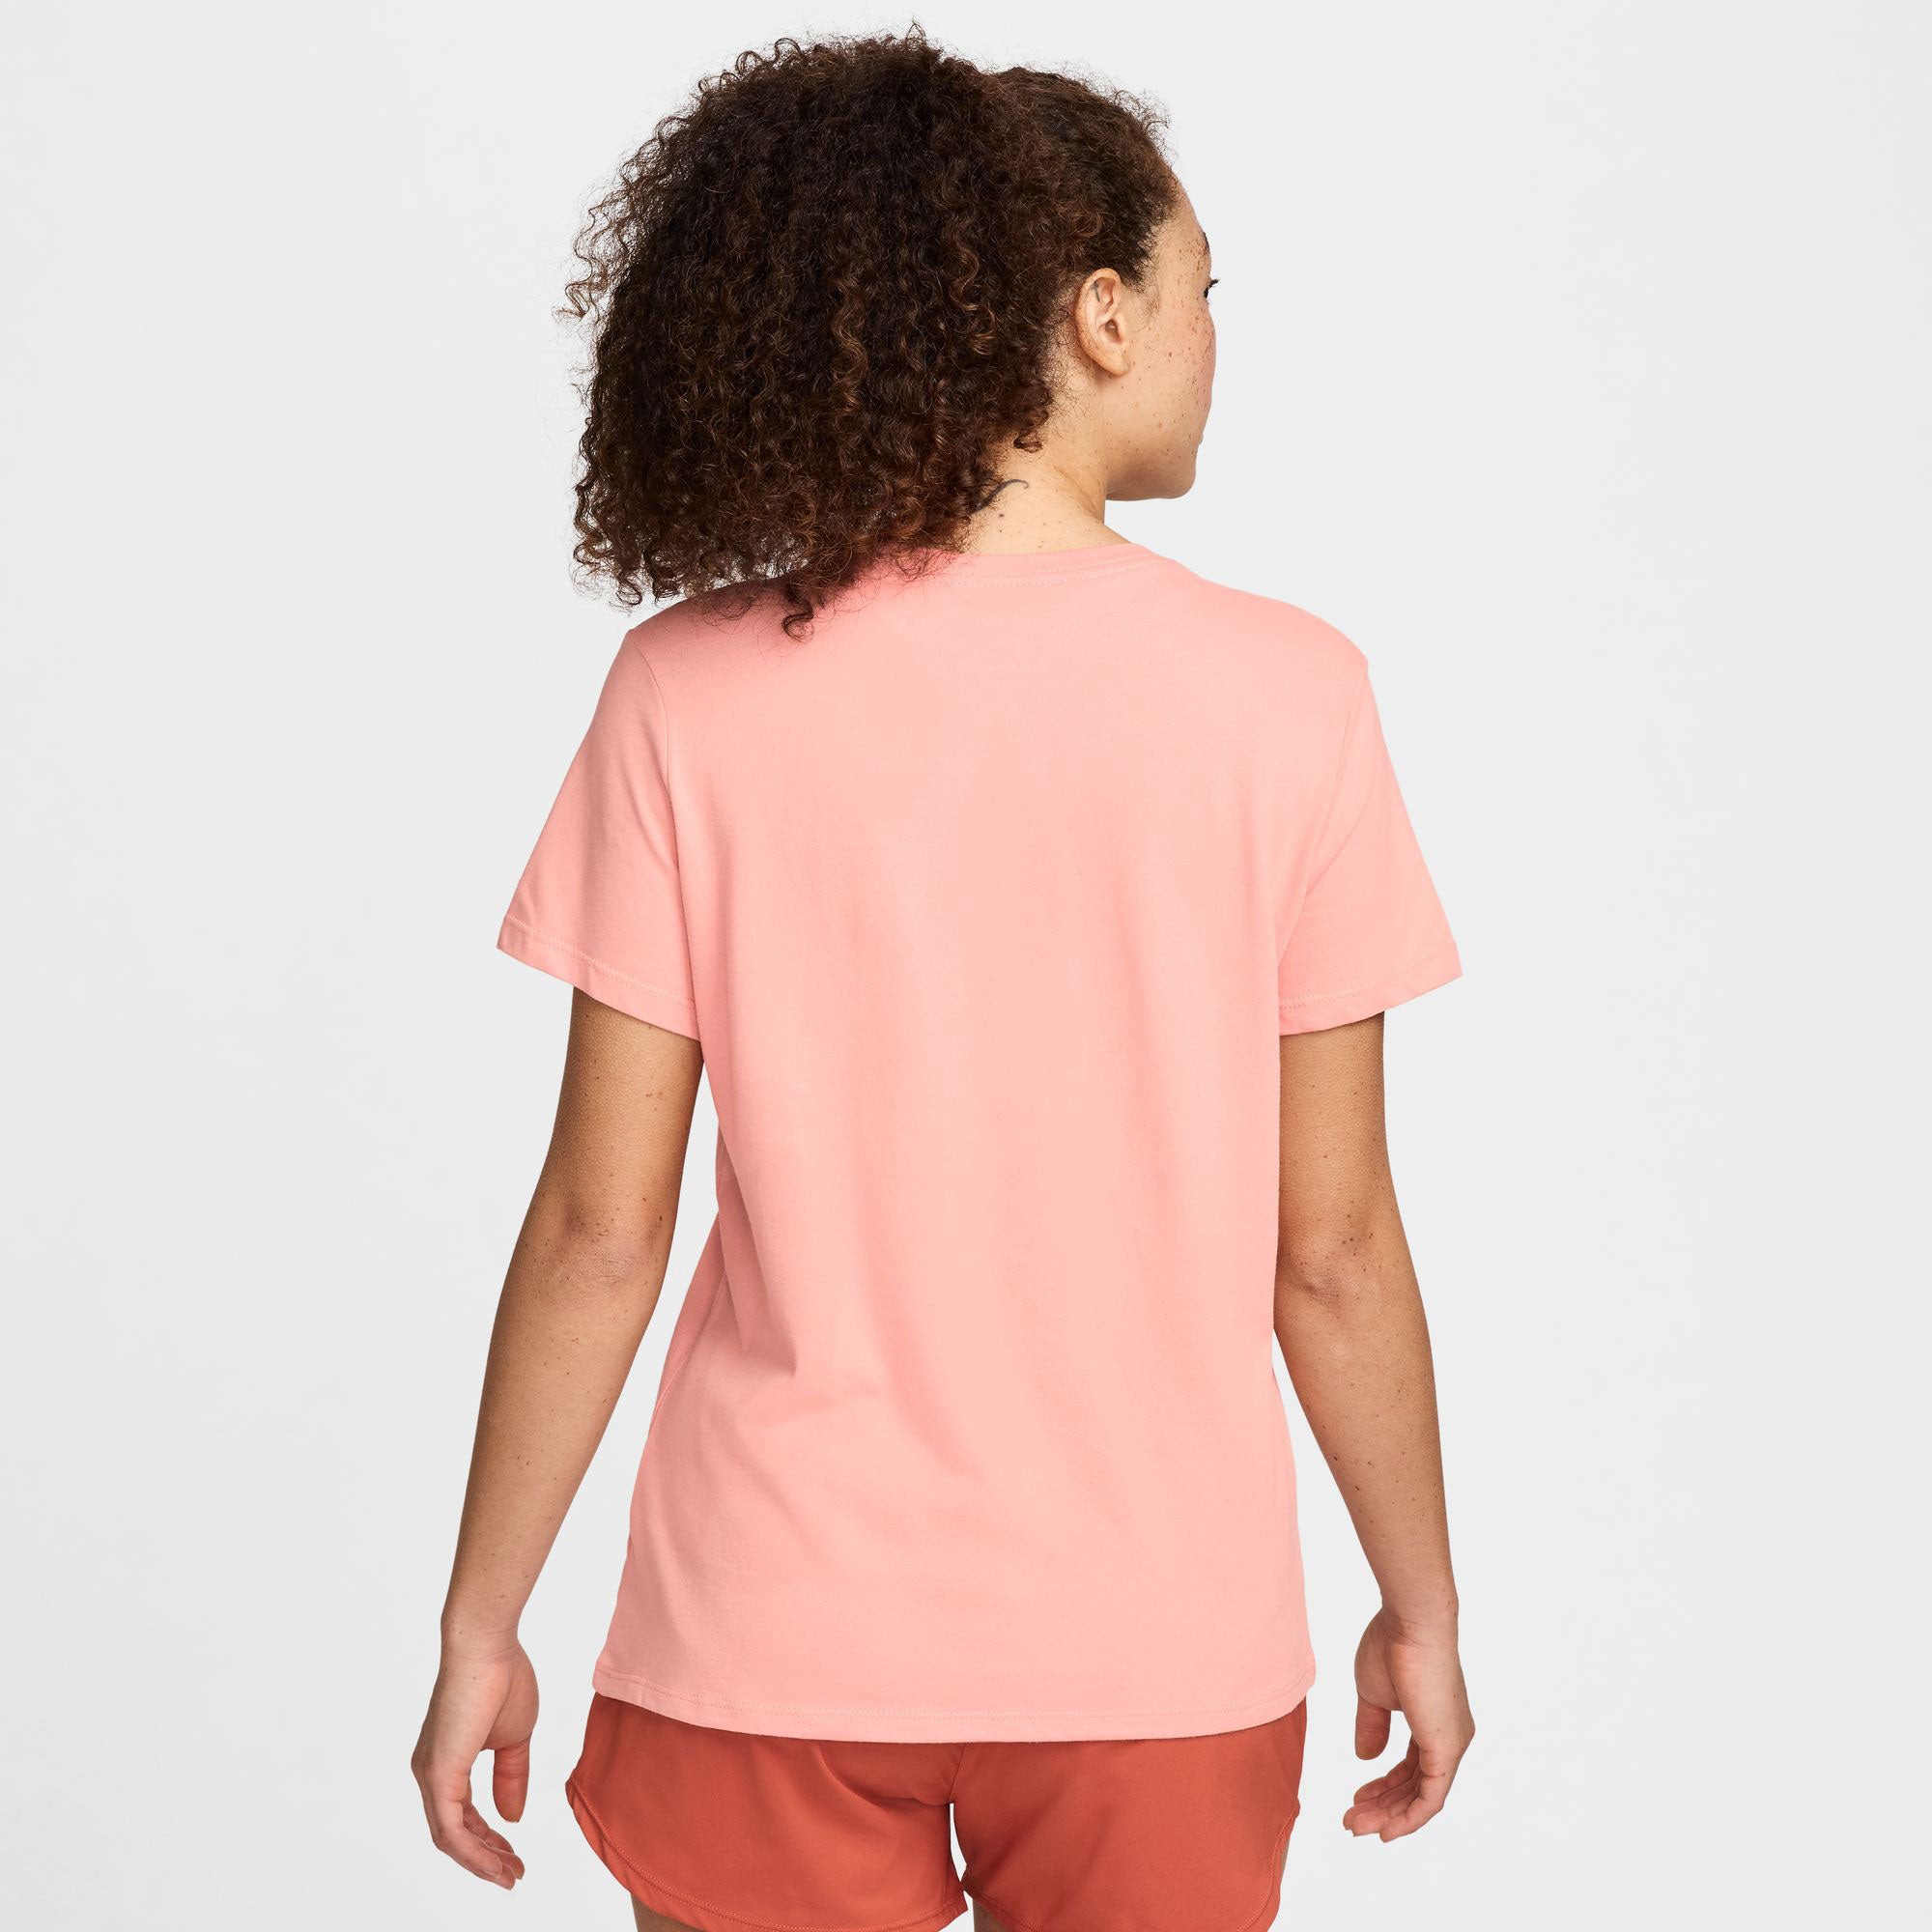 Nike Slam Paris Women's Dri-FIT Tennis T-Shirt - Pink (2)